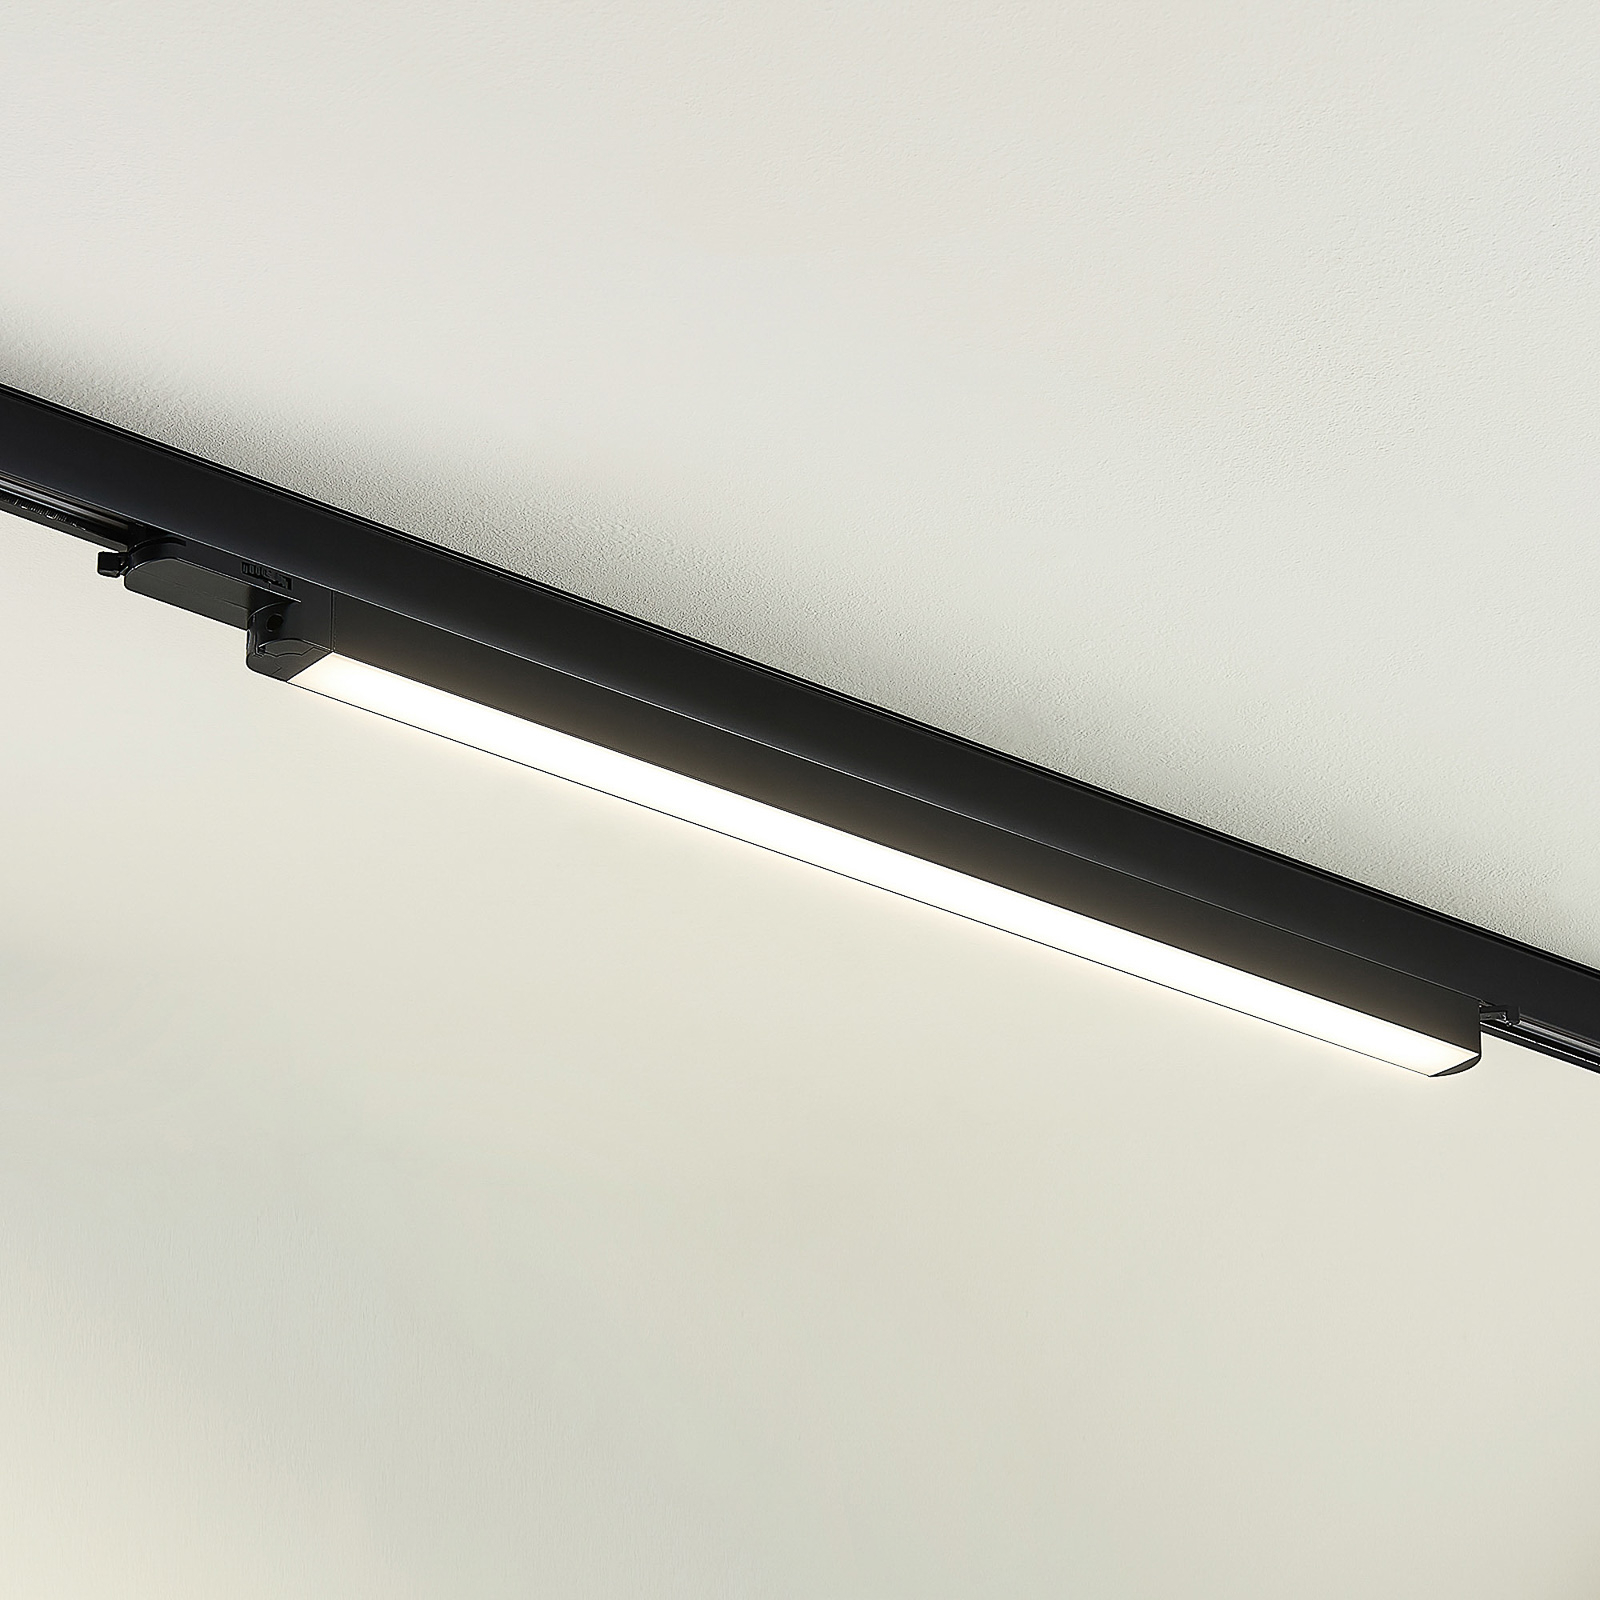 Arcchio Harlow LED-Leuchte schwarz 69cm 4000K